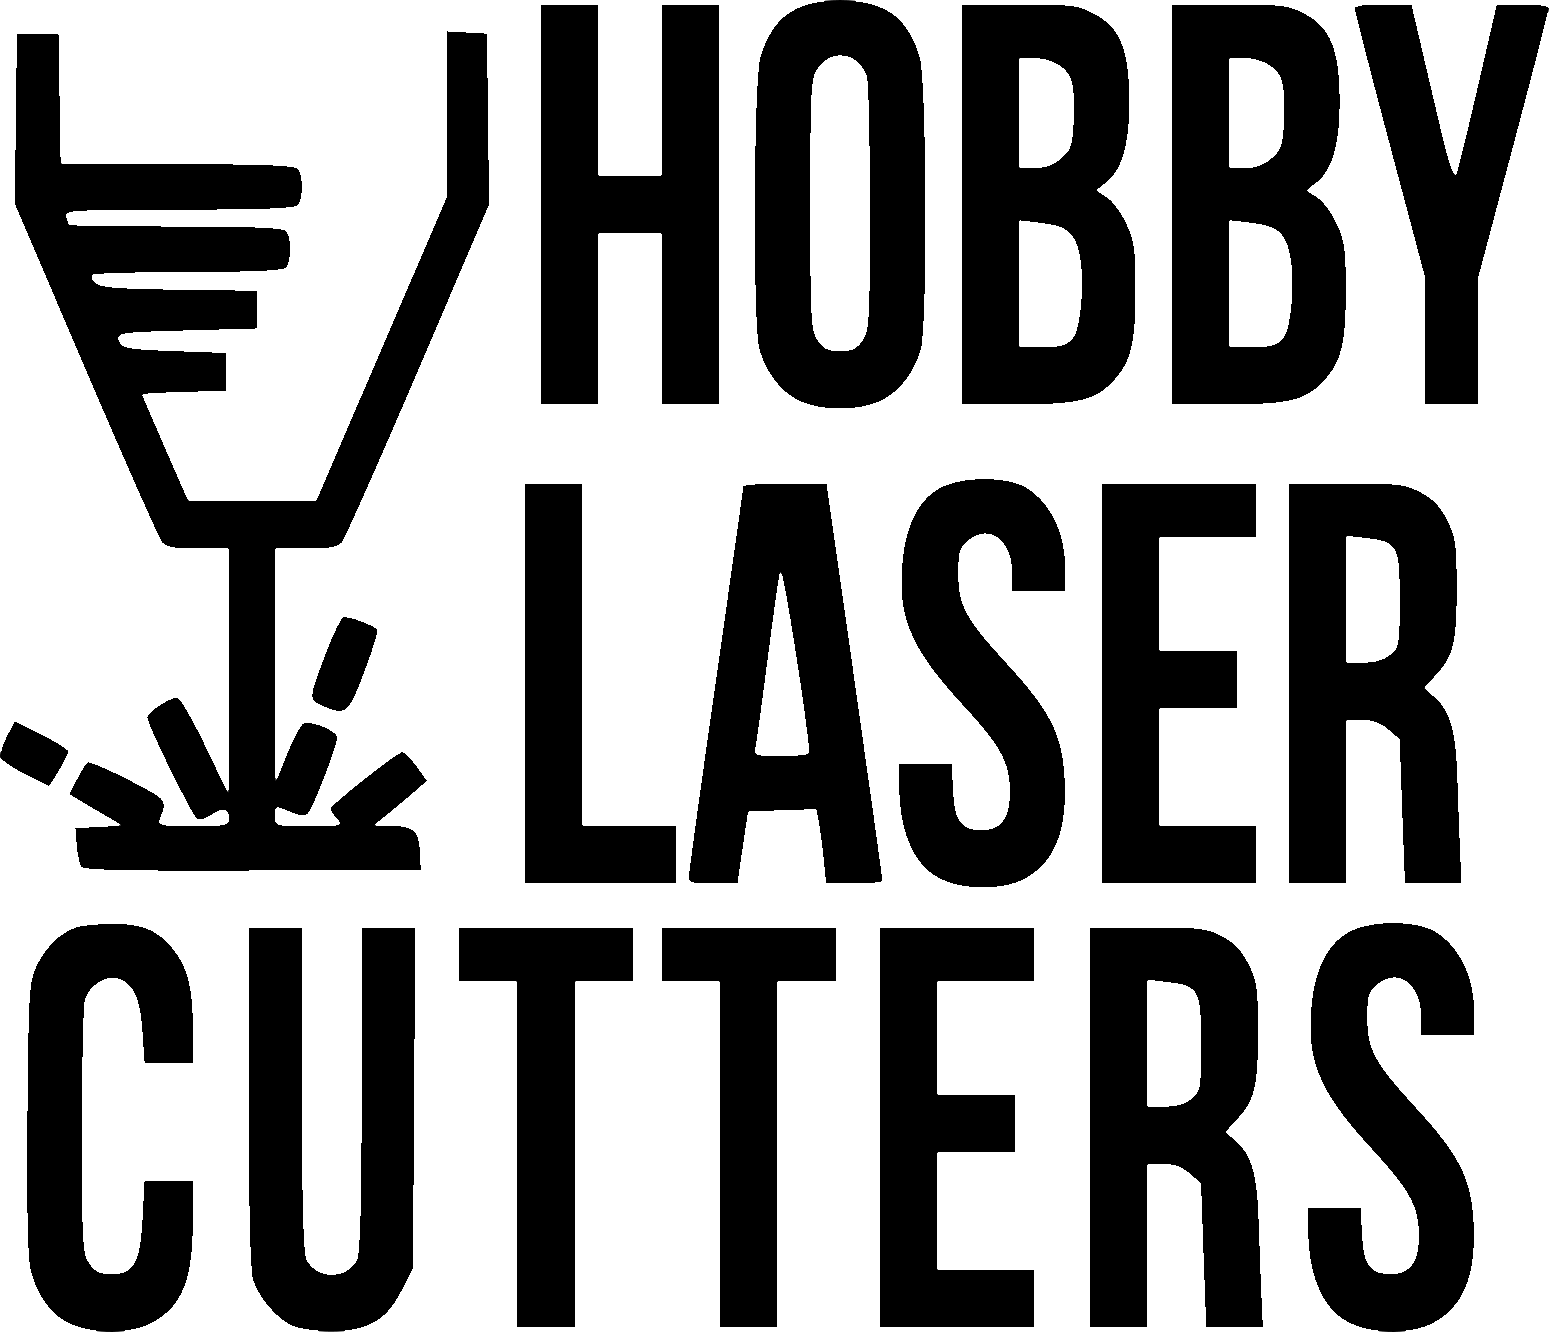 hobbylasercutters.com